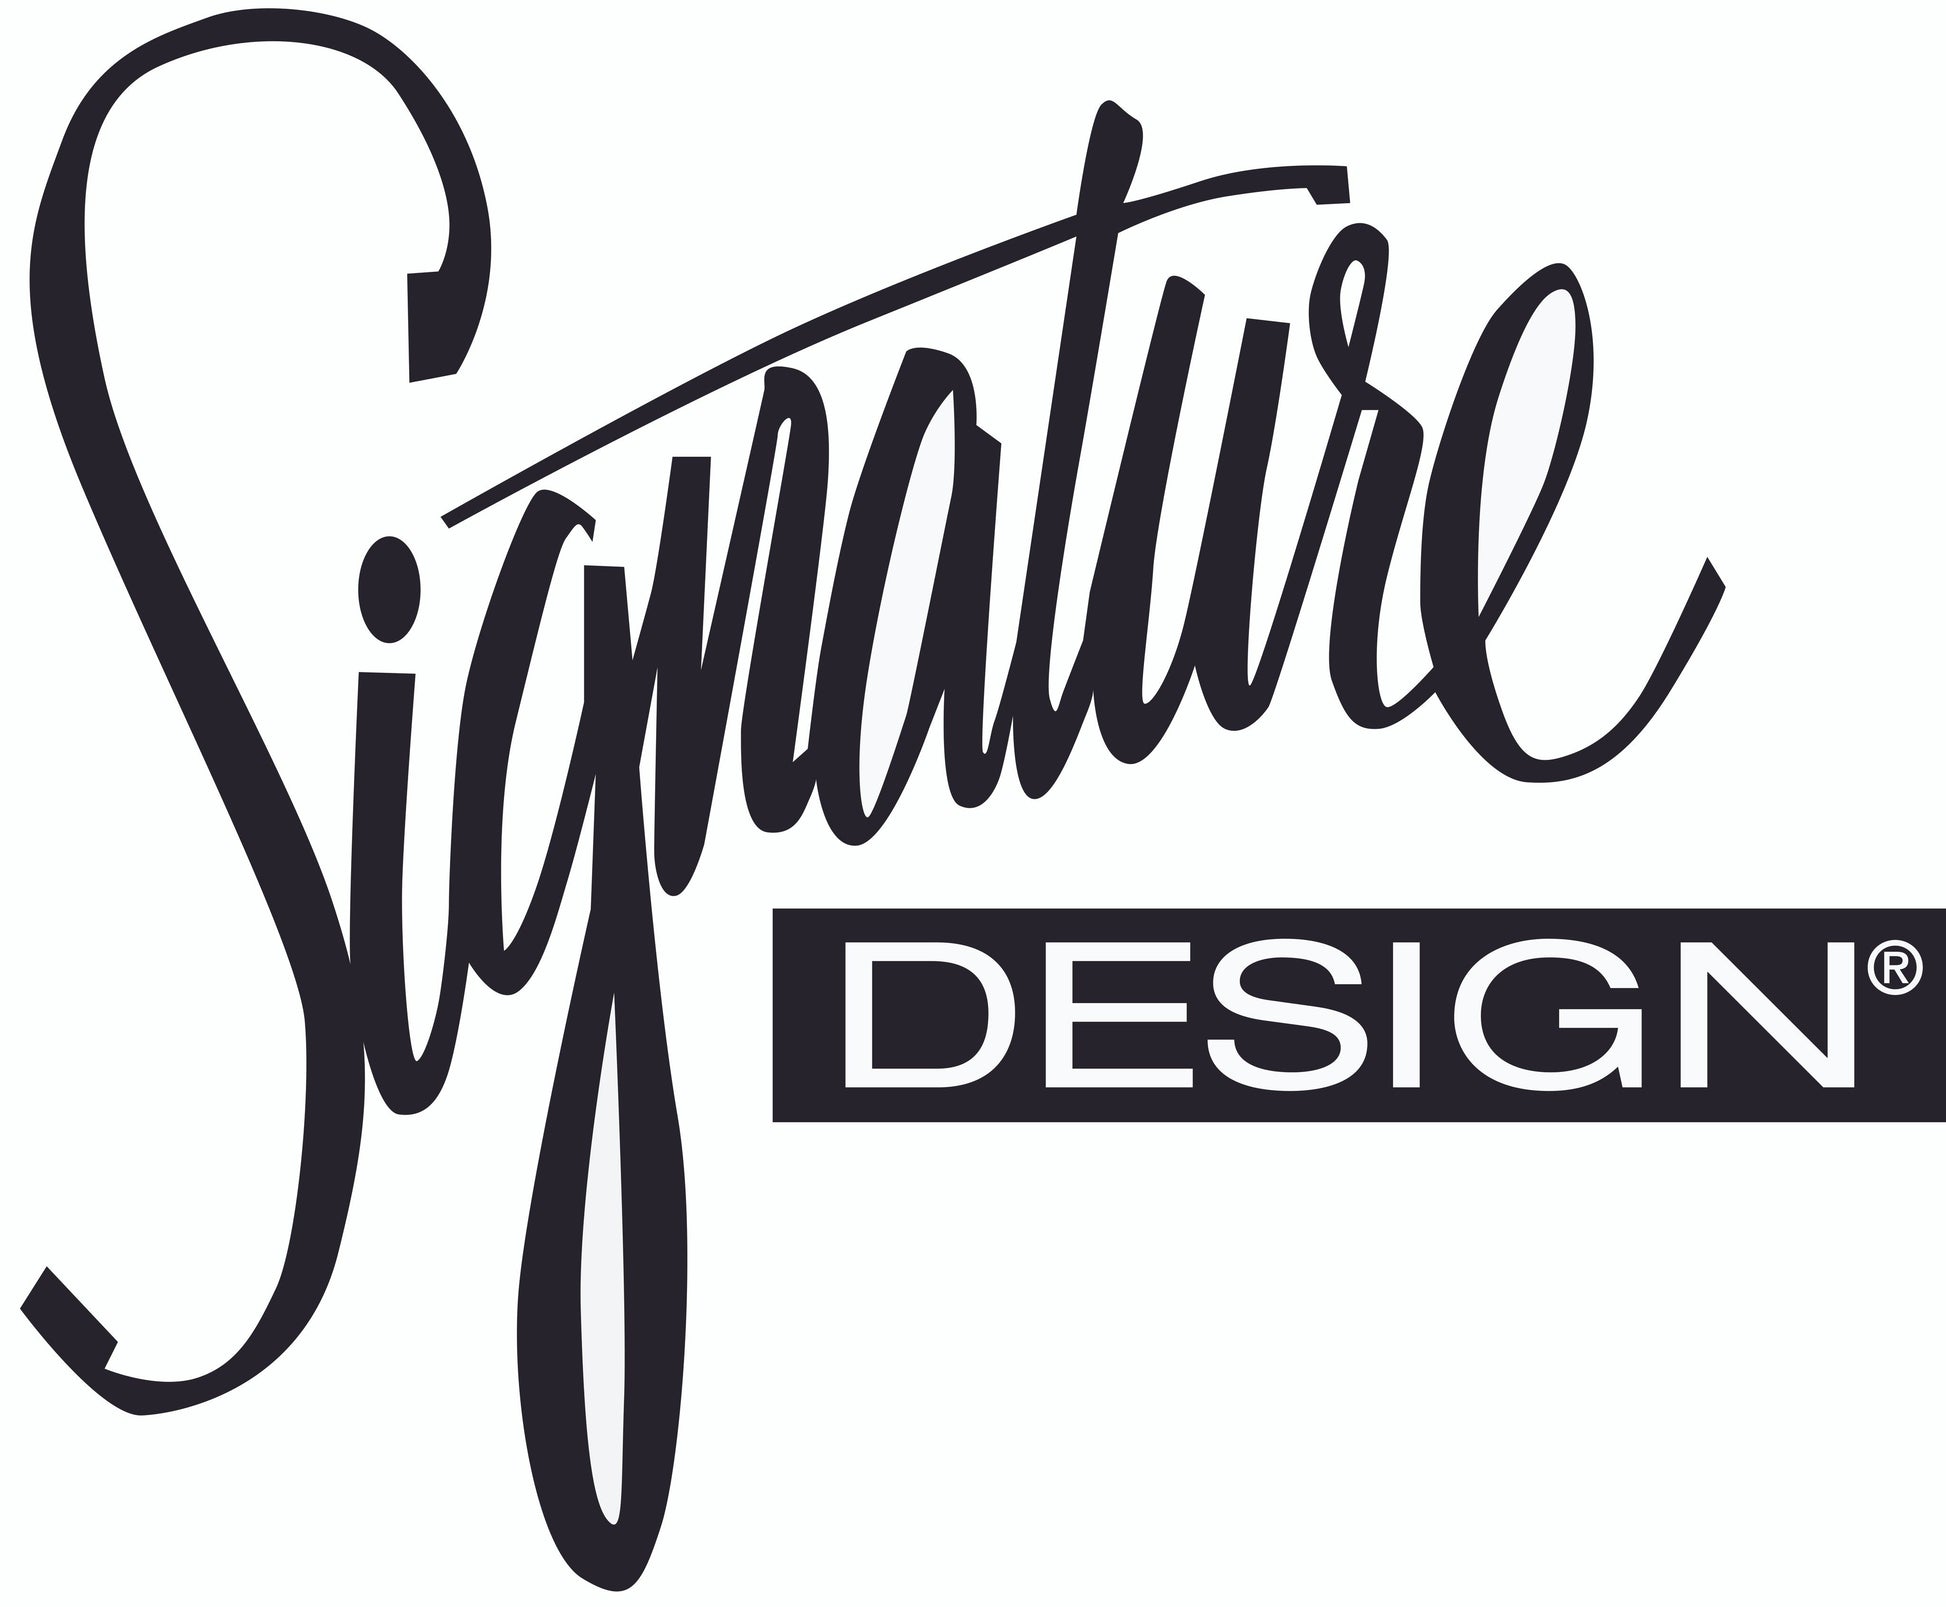 Henridge Accent Table Signature Design by Ashley®